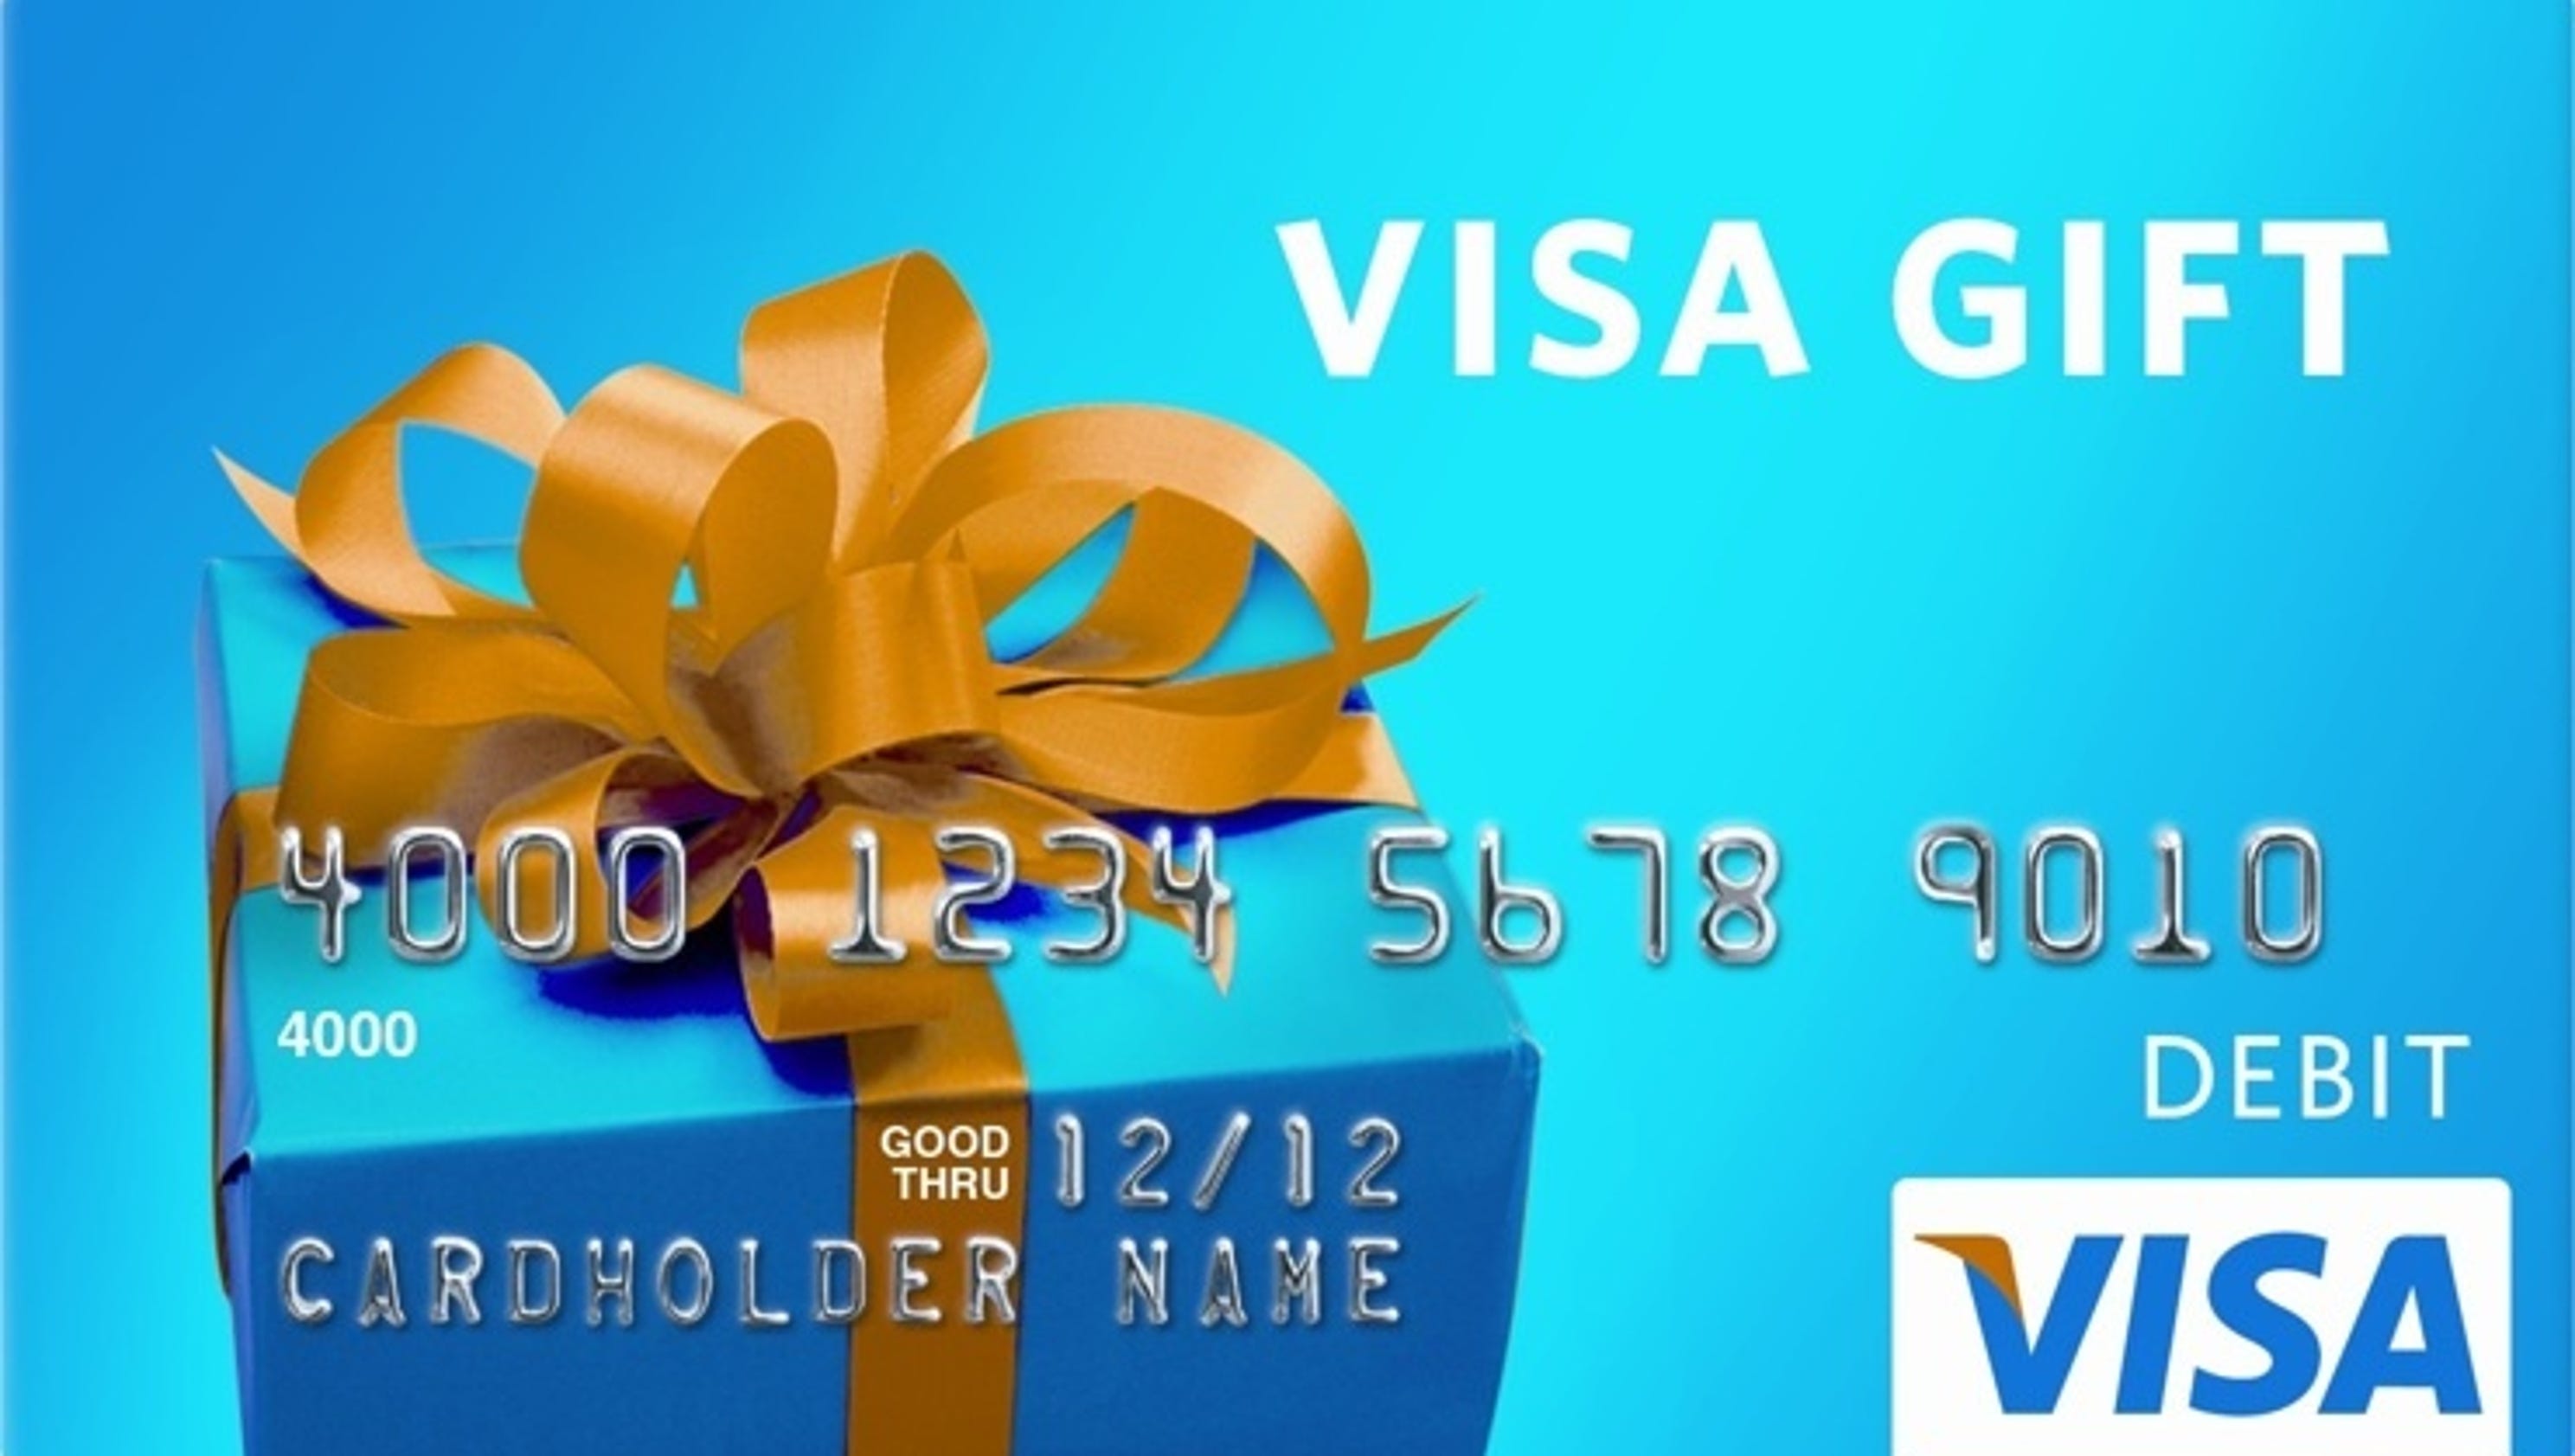 A 500 VISA gift card awaits